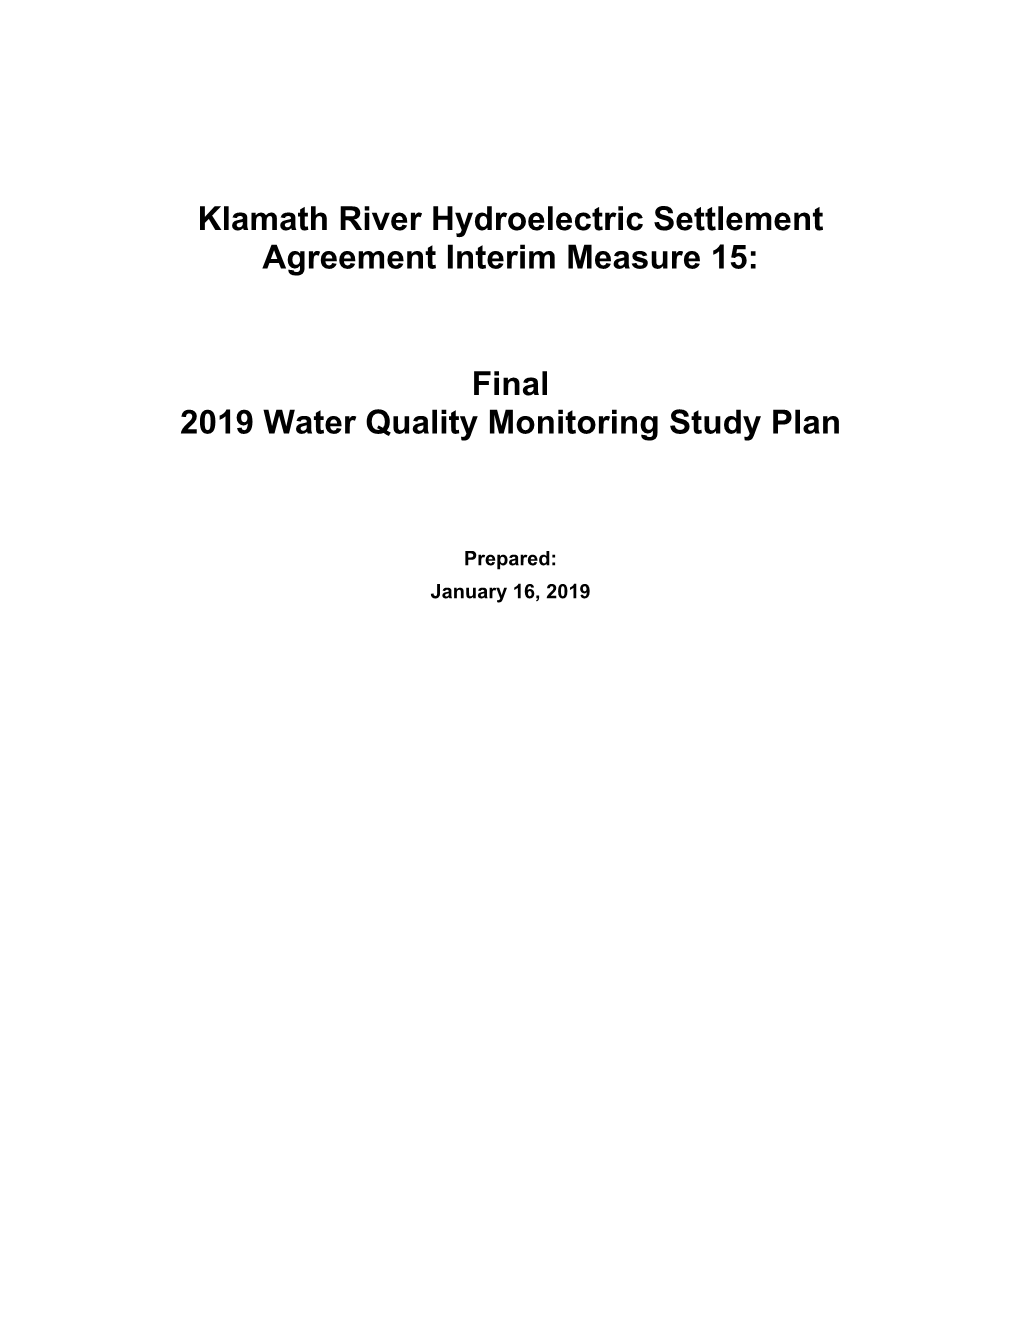 Klamath River Hydroelectric Settlement Agreement Interim Measure 15